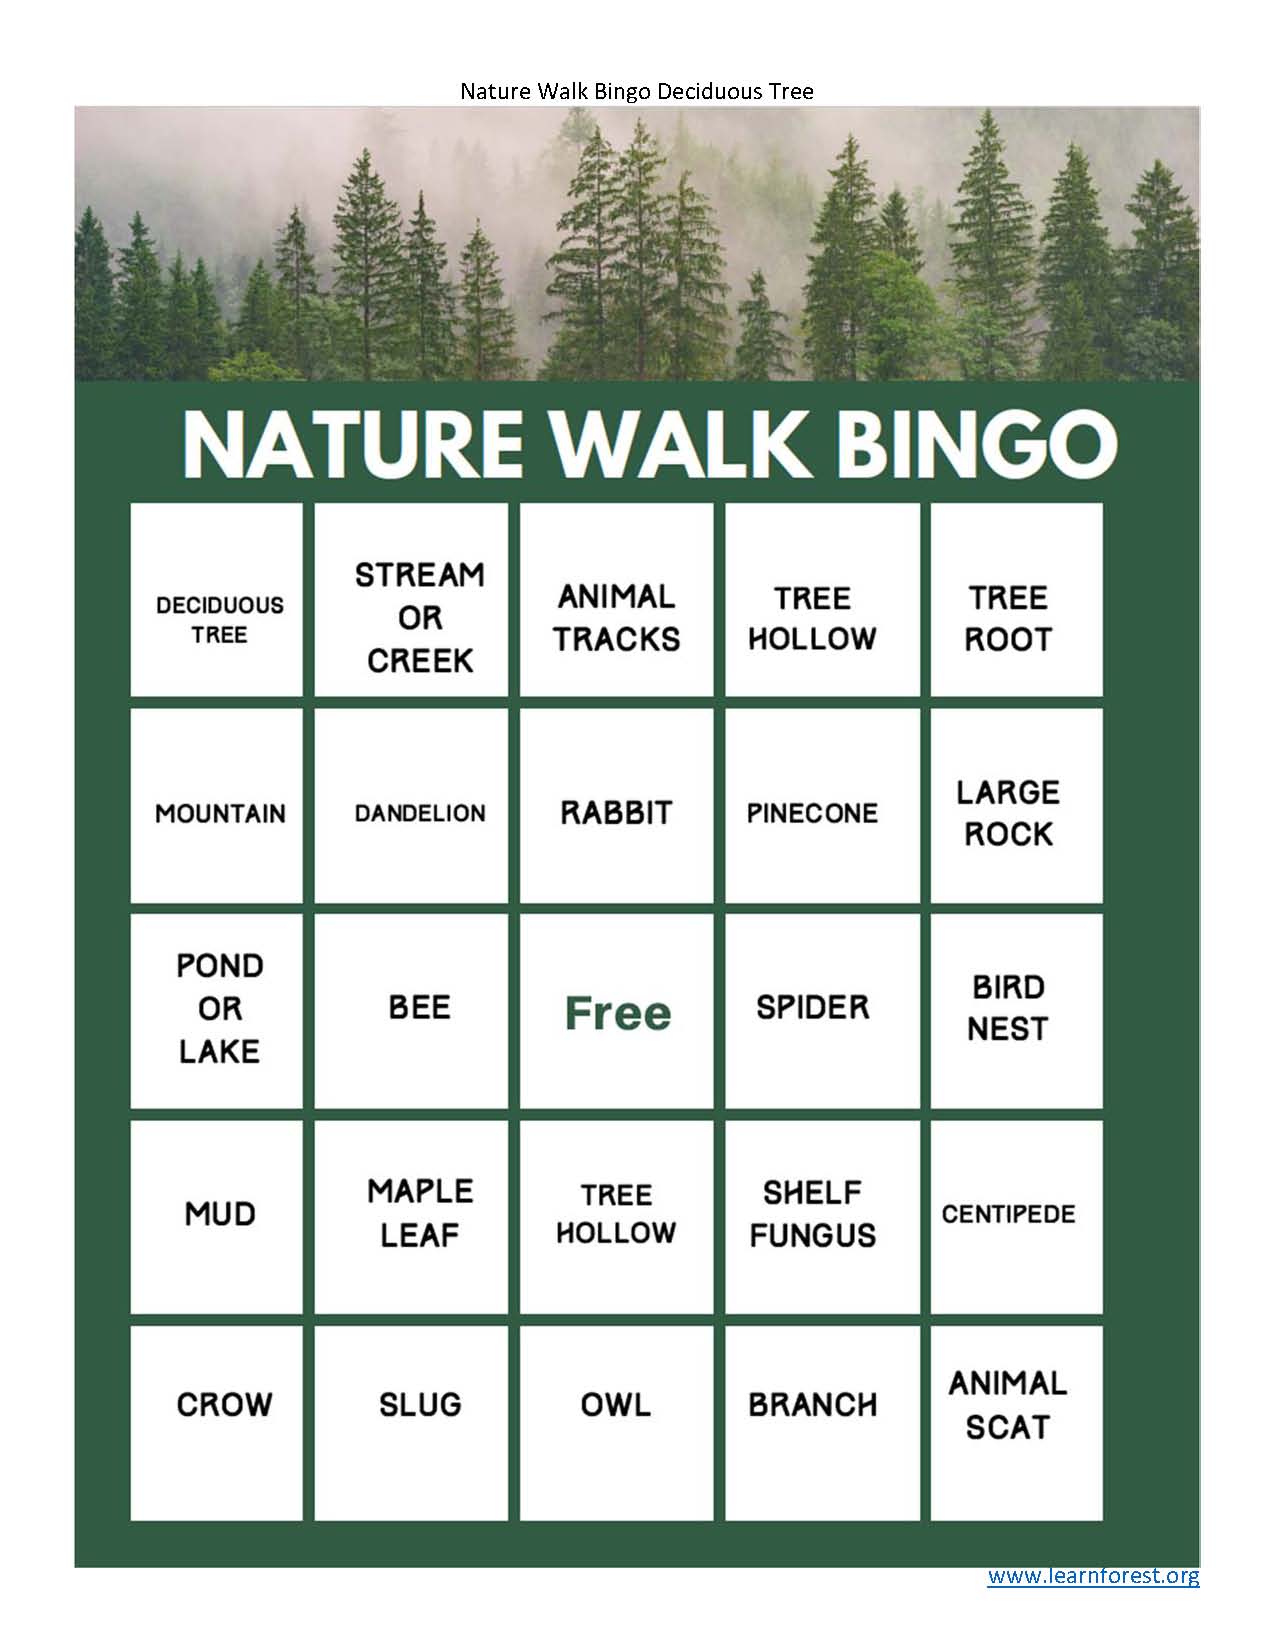 nature-walk-bingo-deciduous-tree-washington-forest-protection-association